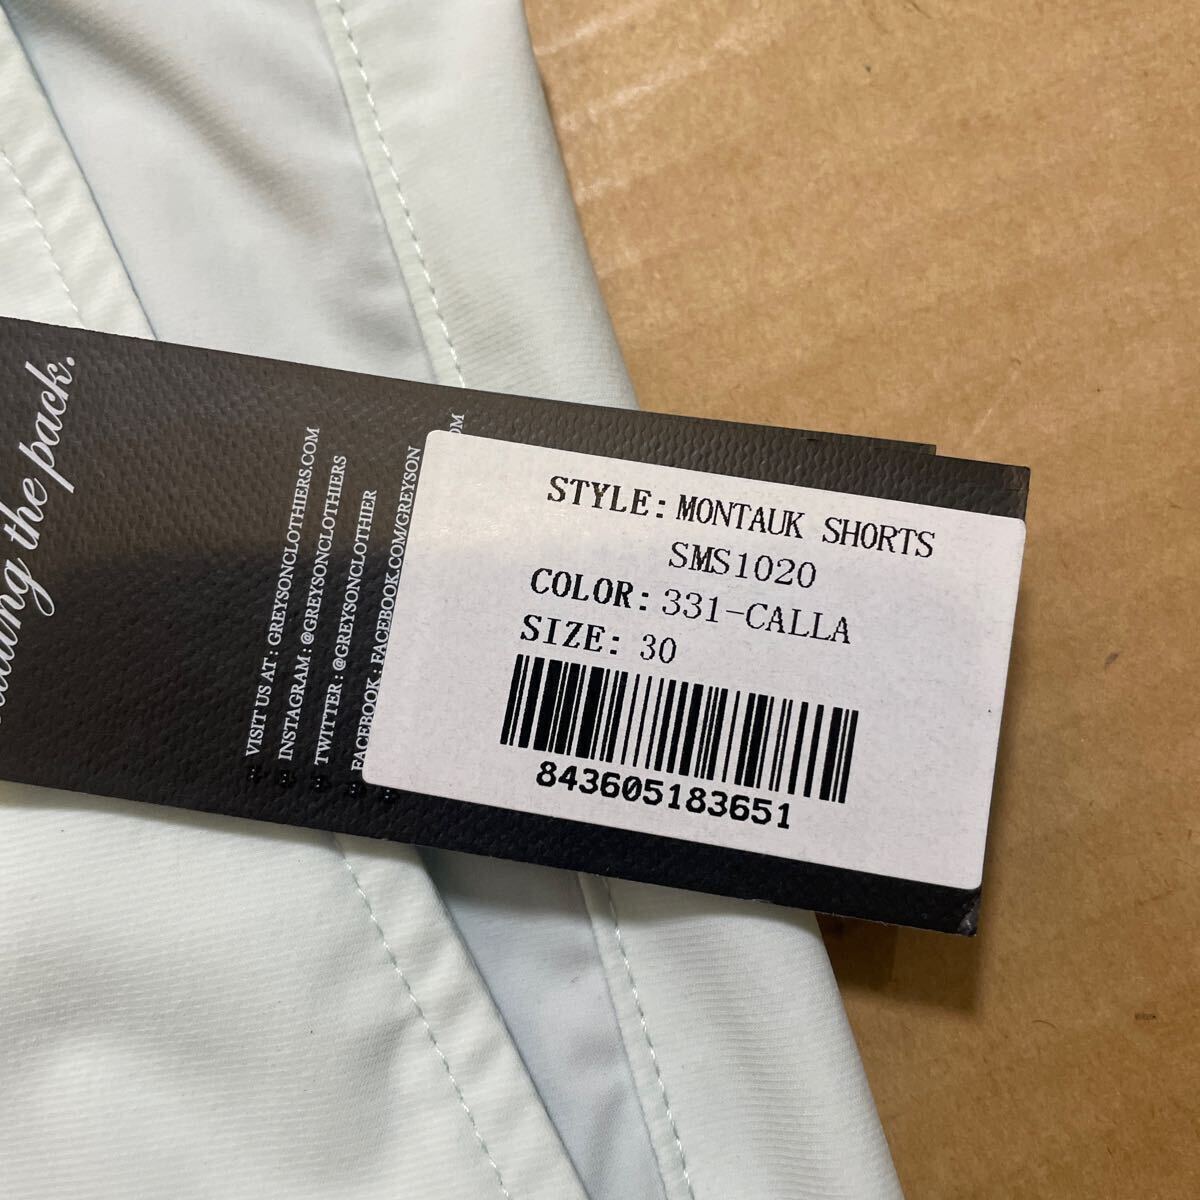  regular new goods regular price 22100 jpy [ men's 30 -inch 78-80 blue ]GREYSON RLX gray somon talk show tsu short pants shorts Golf 